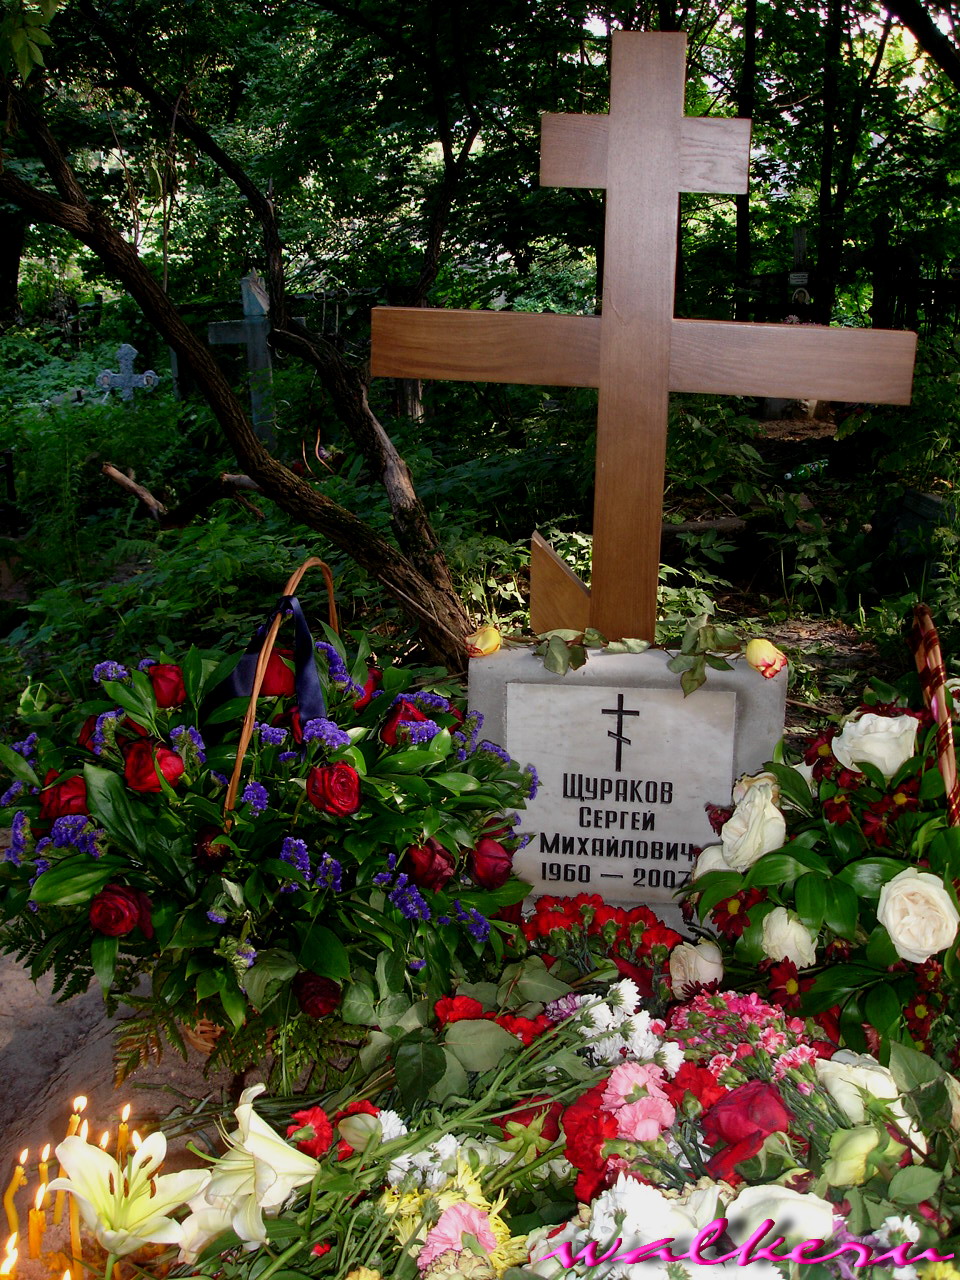 Могила Щуракова С.М. на Волковском кладбище